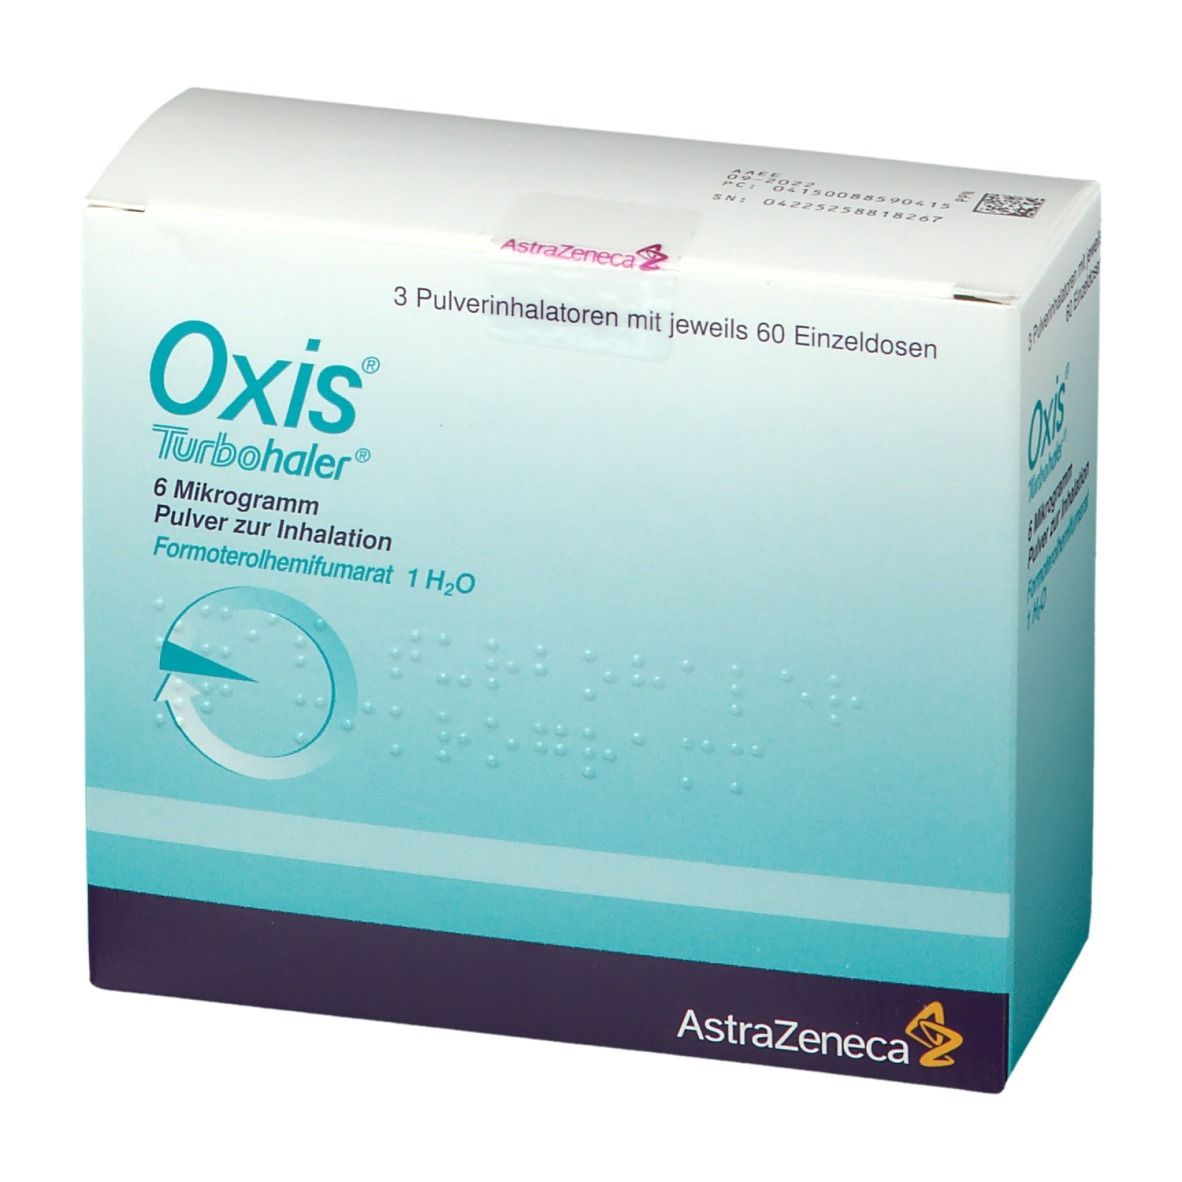 Oxis® Turbohaler  6 µg 60